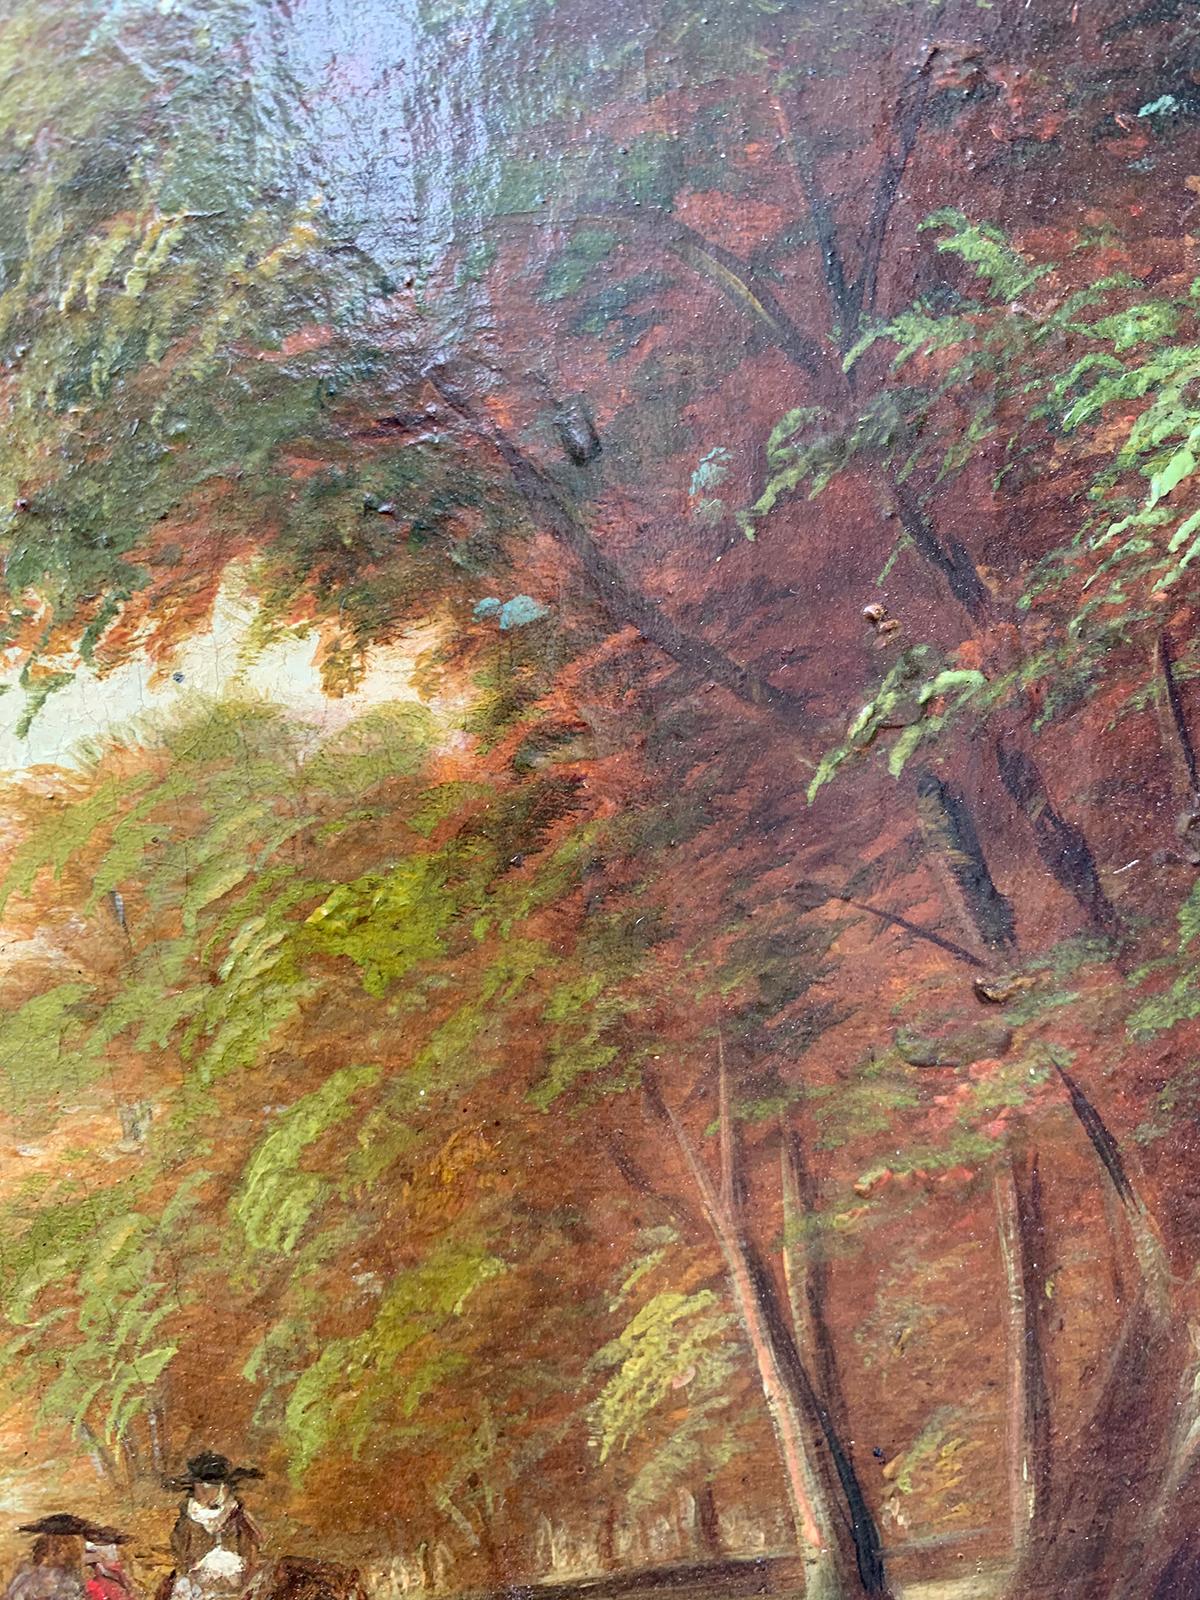 English Oil Painting after Augustus Callcott's Original 